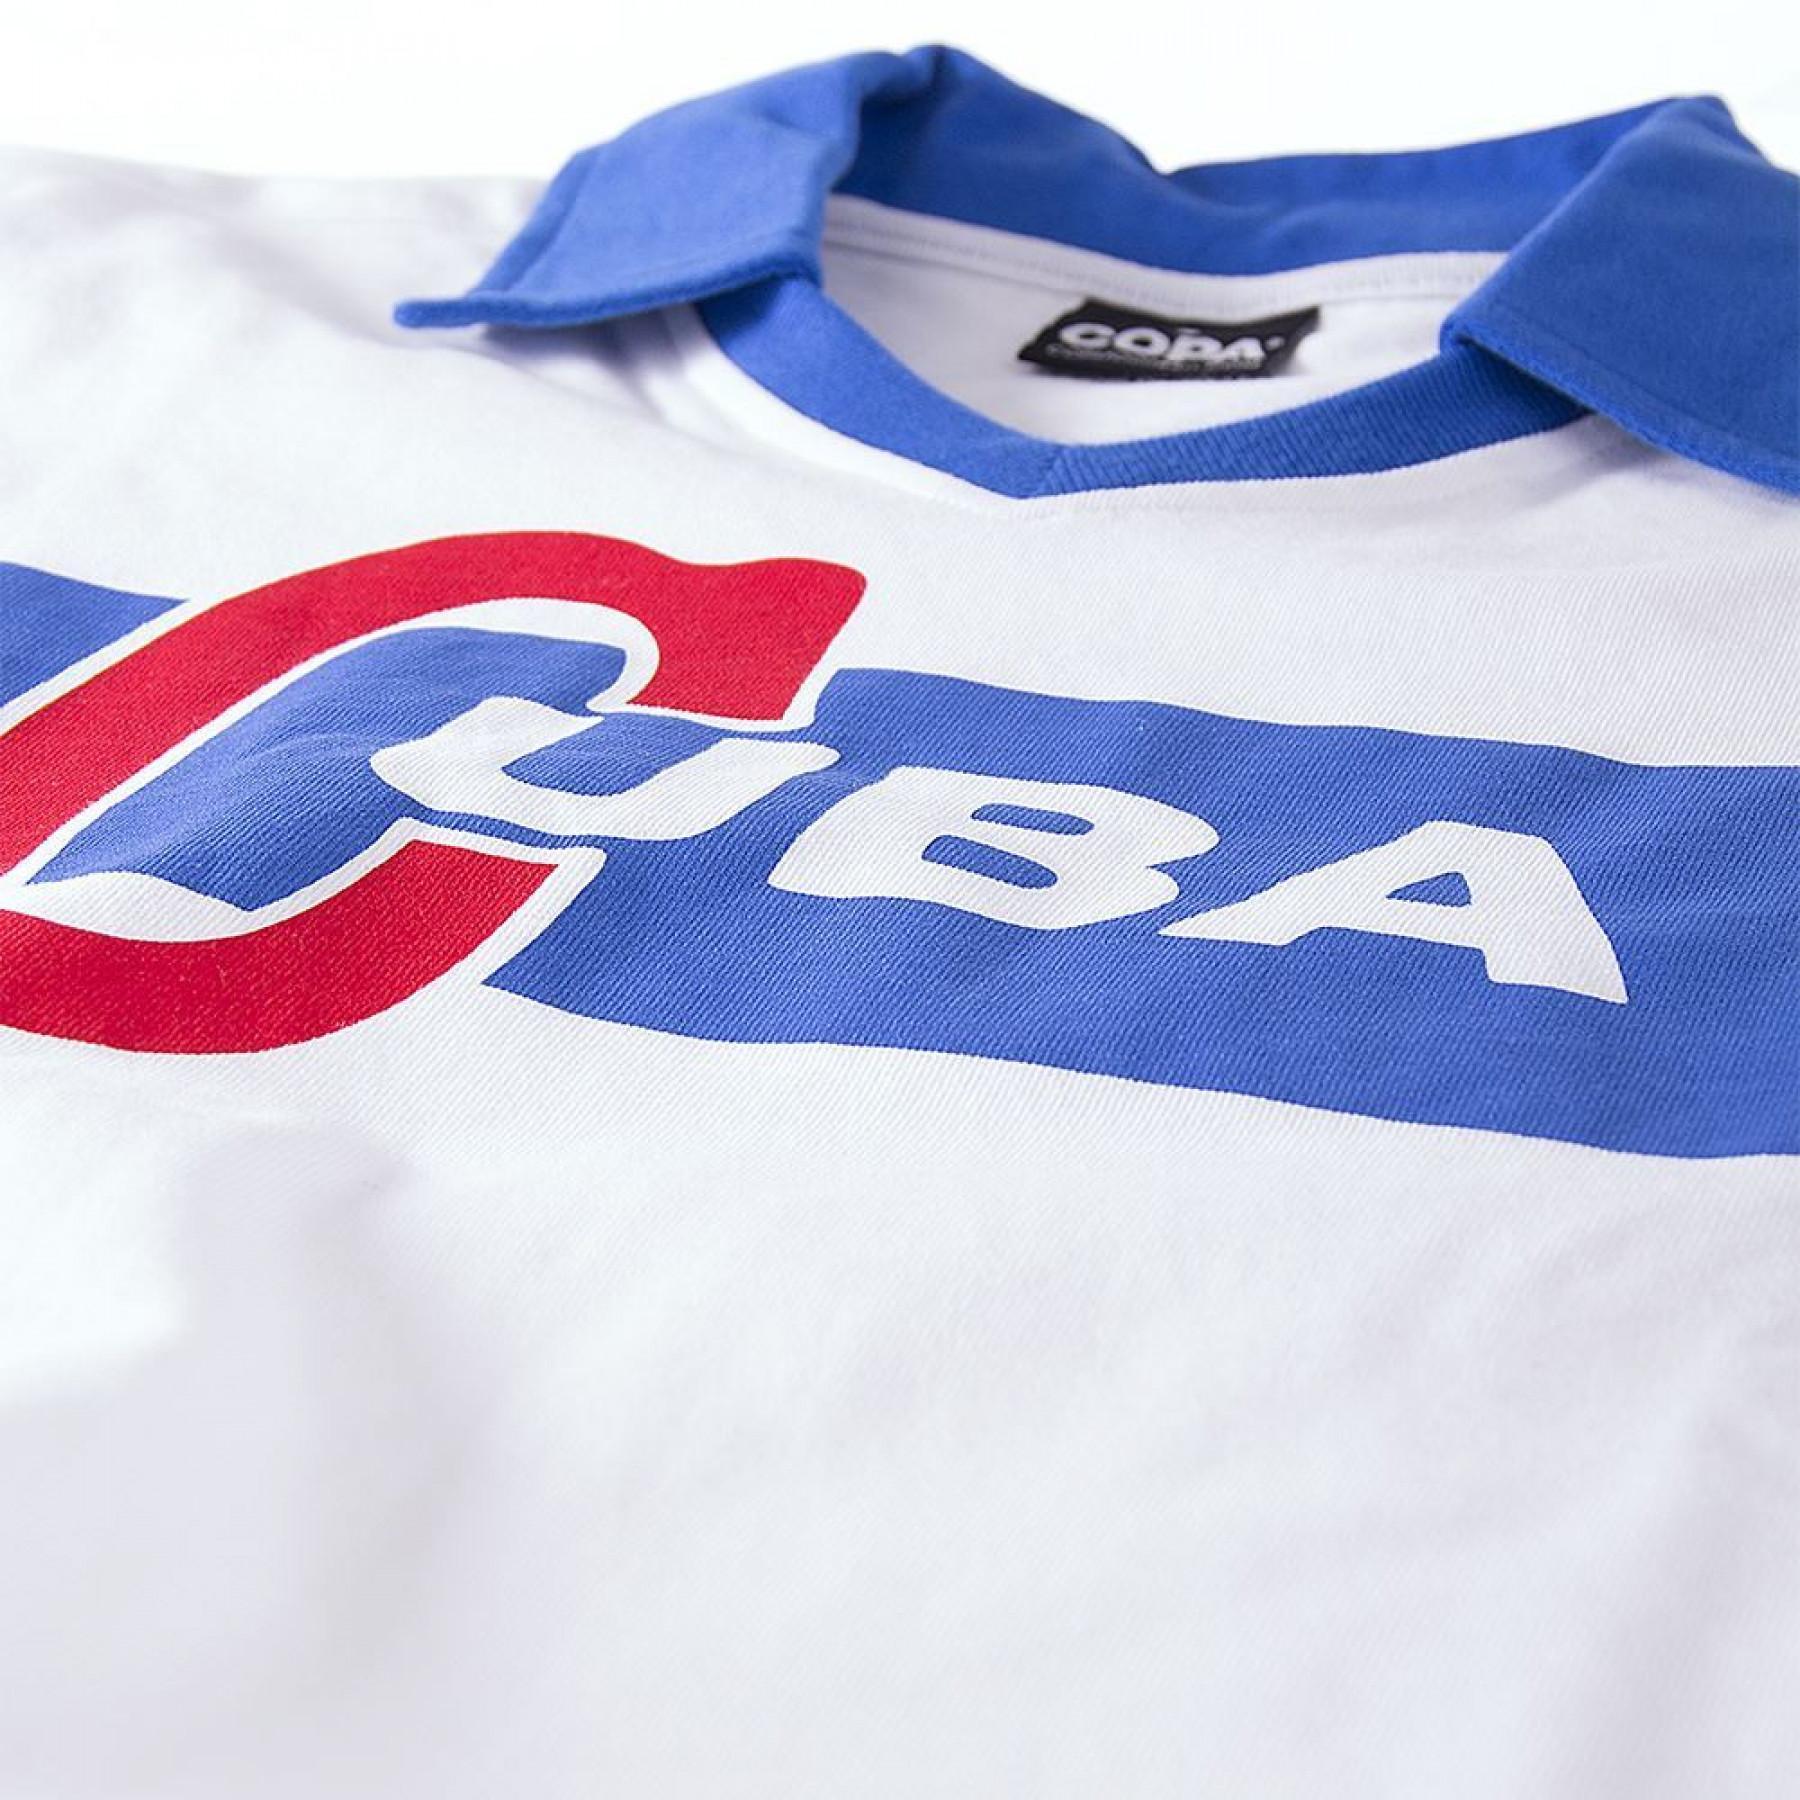 Camiseta primera equipación Cuba 1962